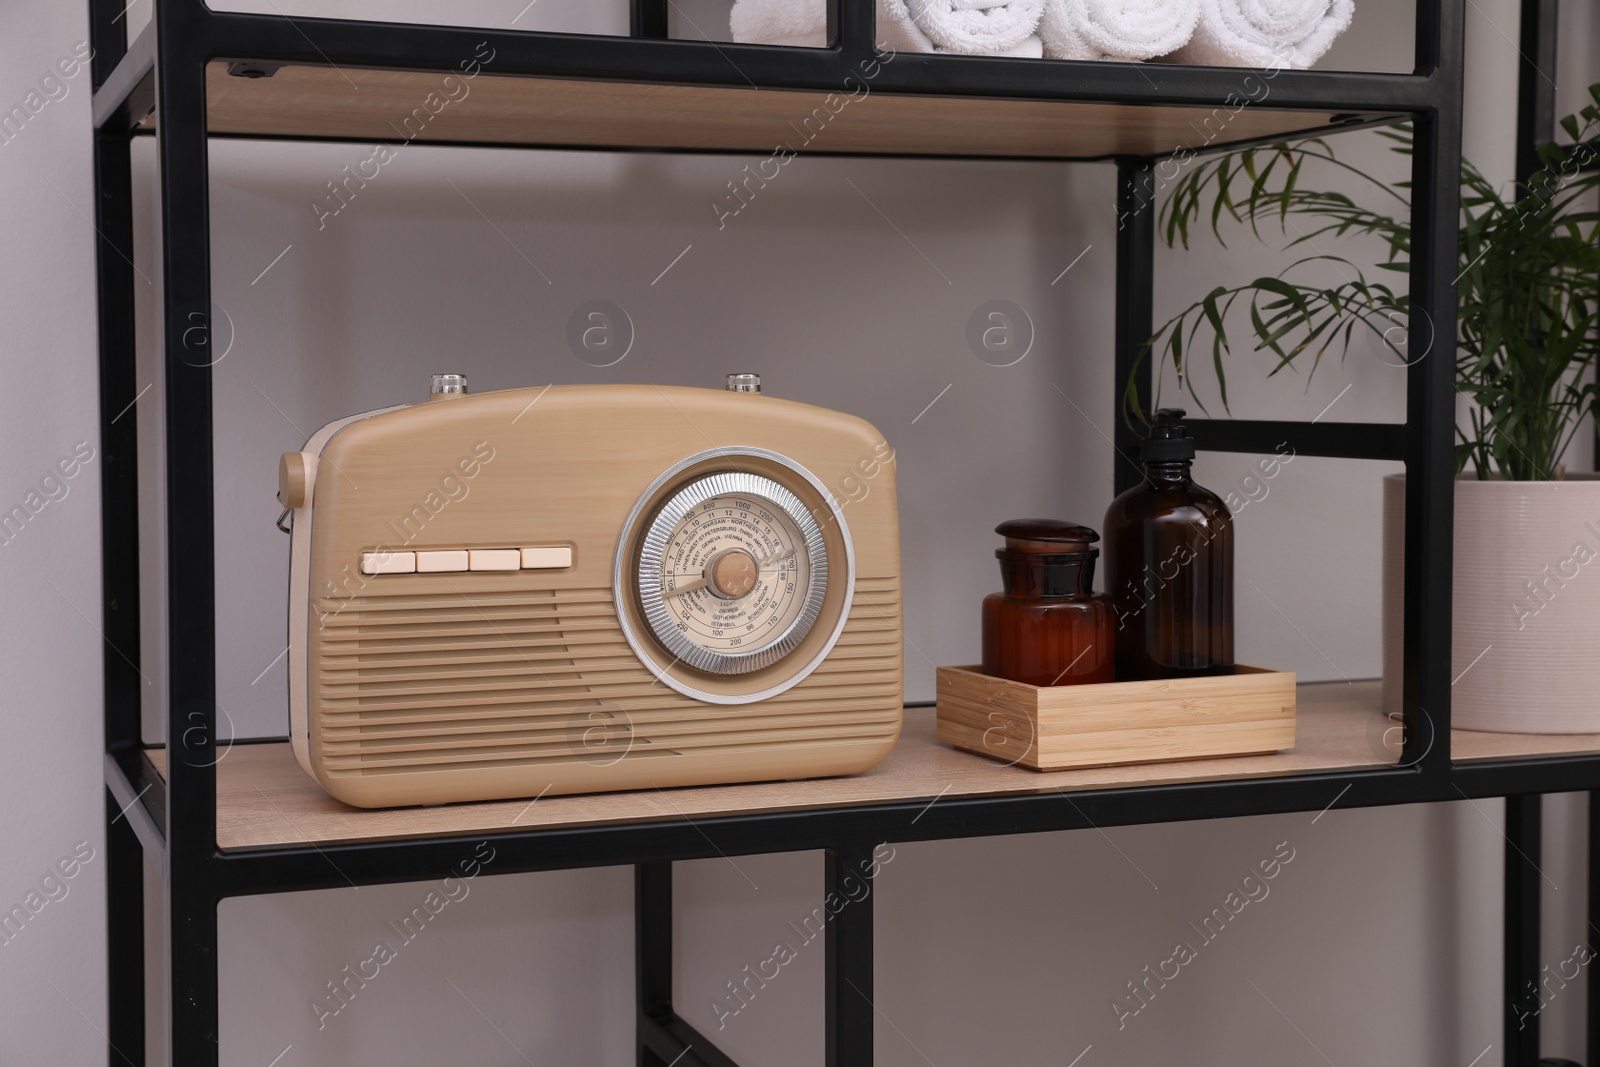 Photo of Stylish beige radio on rack with toiletries and houseplant indoors